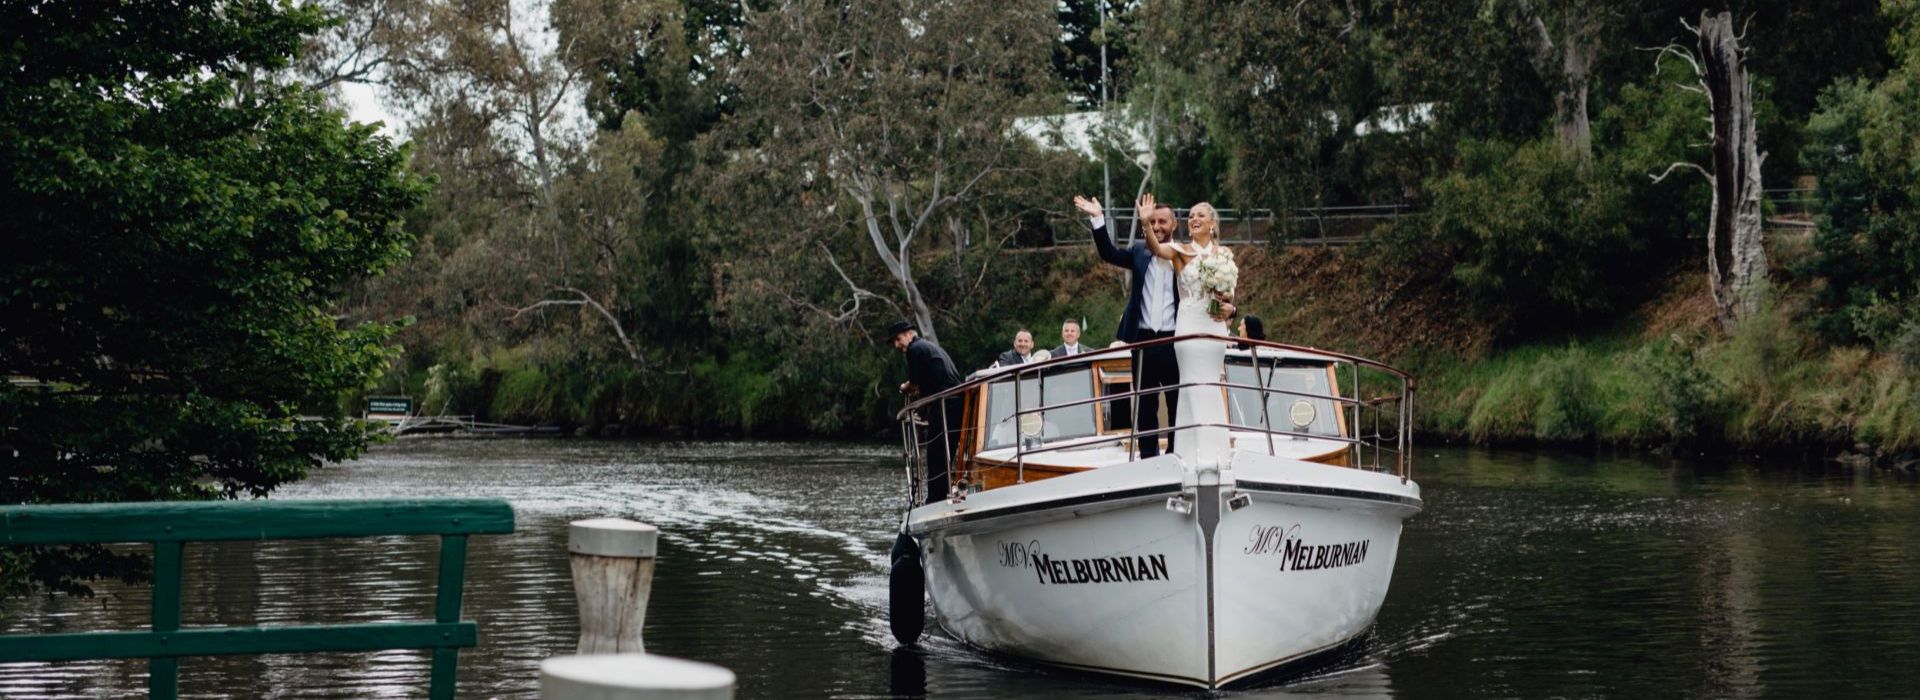 Newlyweds enjoying a romantic boat ride to Leonda, a Melbourne wedding venue.